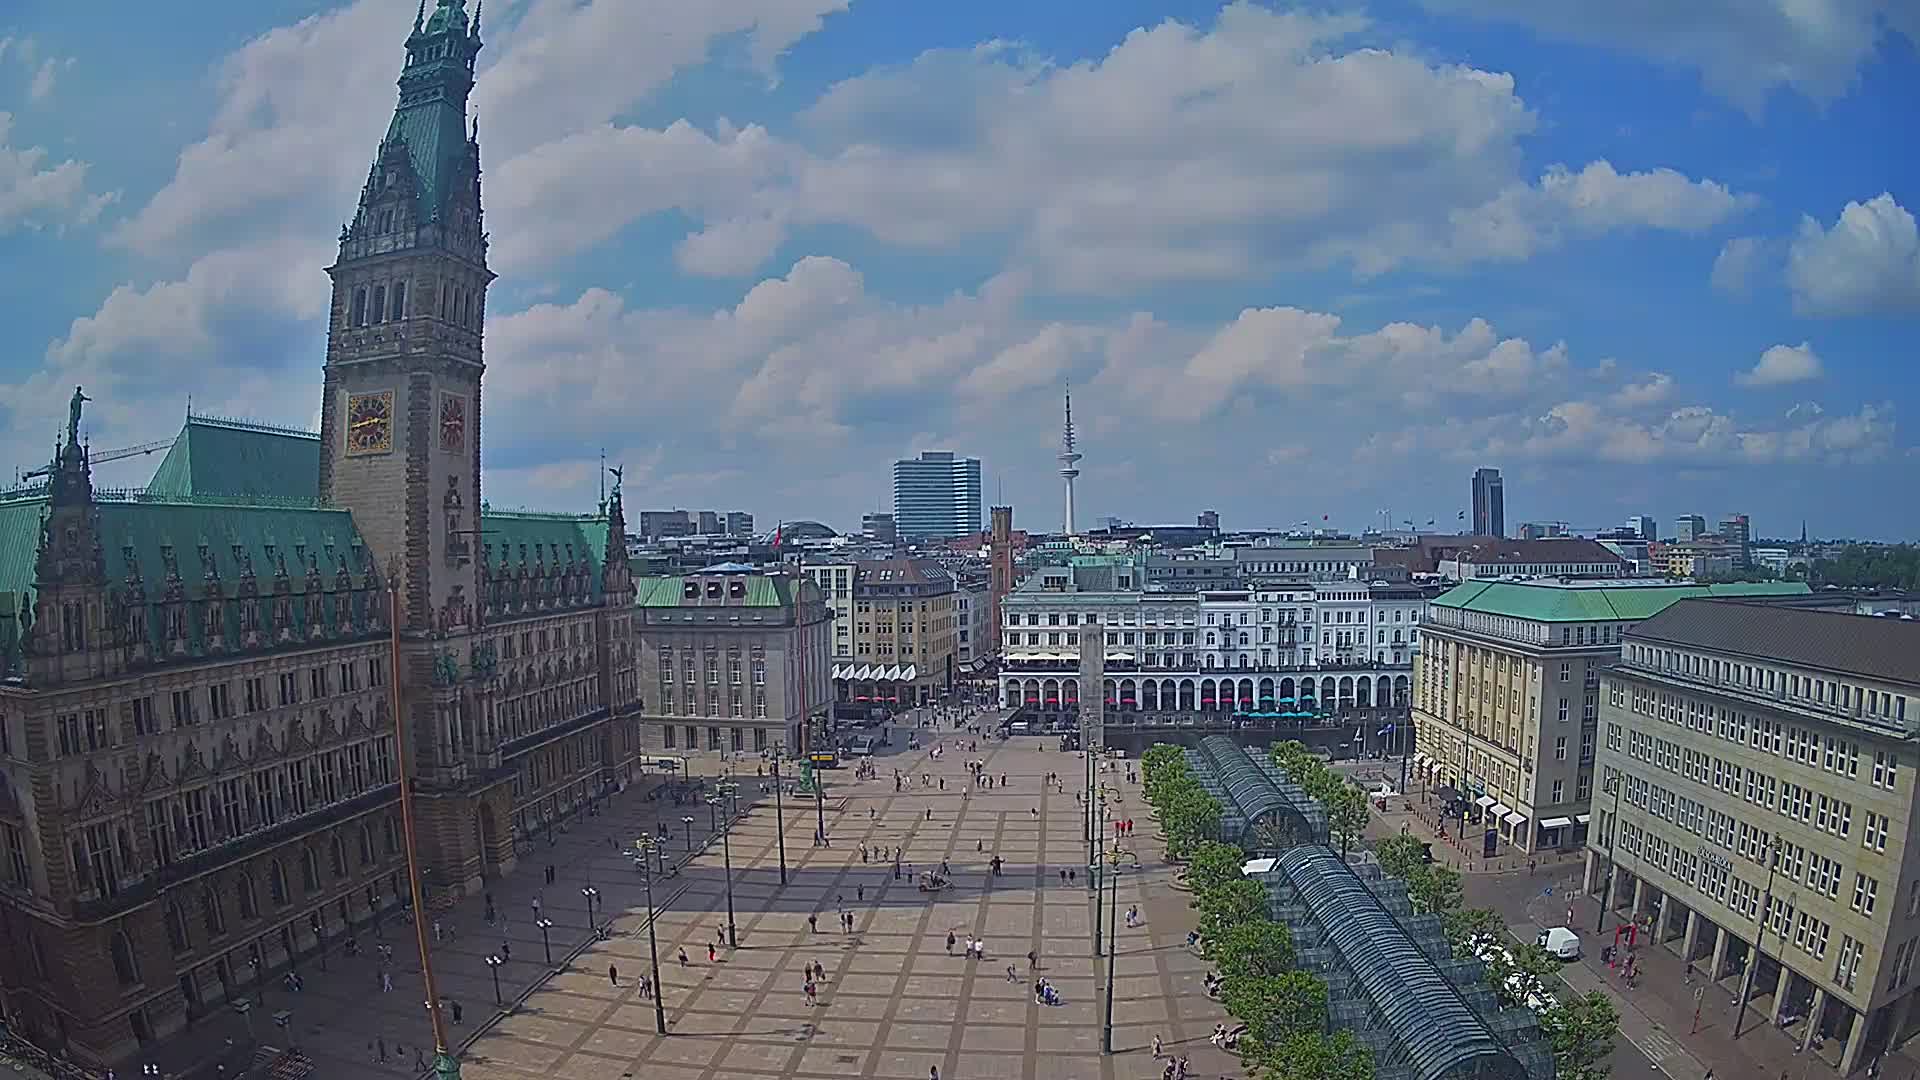 Hamborg Tor. 14:45